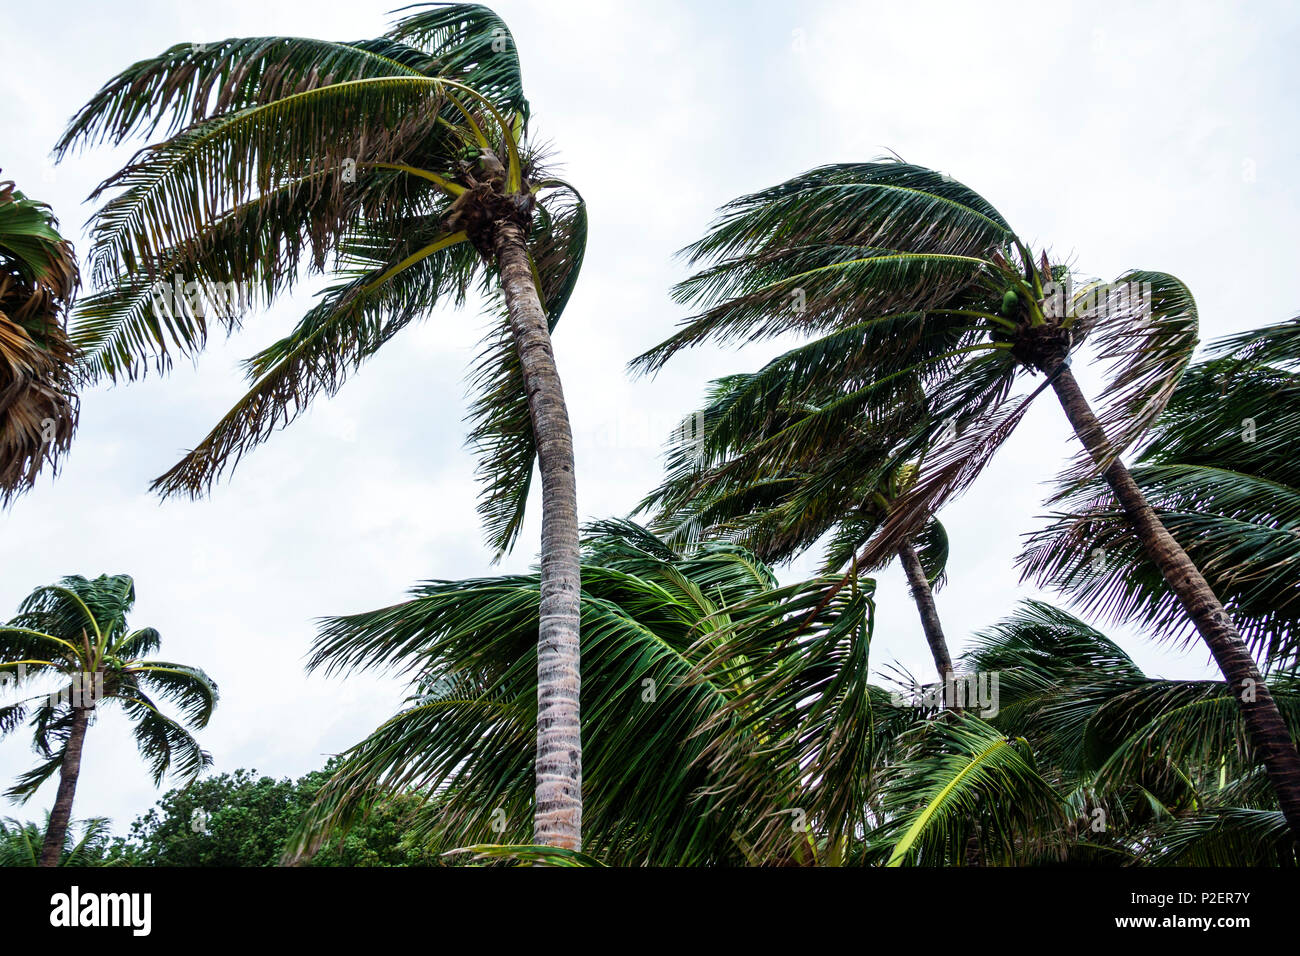 Miami Beach Florida, Marjory Stoneman Douglas Park, Hurrikan Irma, tropische Sturmwinde, sich biegende Palmen, Wedel wehen, grauer Himmel, windig, FL17 Stockfoto